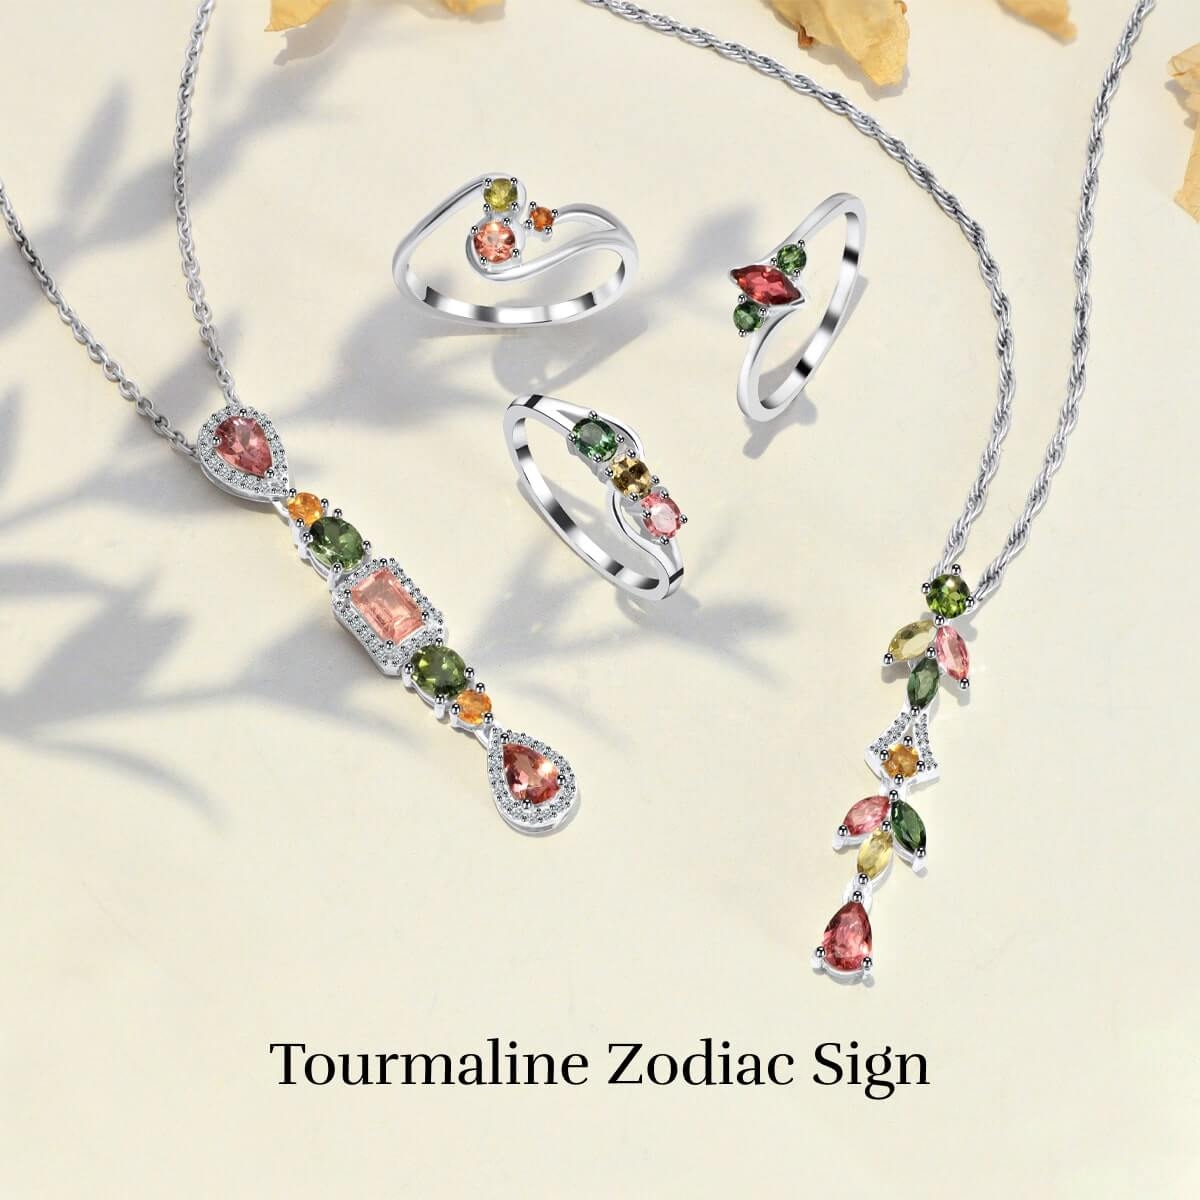 Tourmaline Zodiac Sign